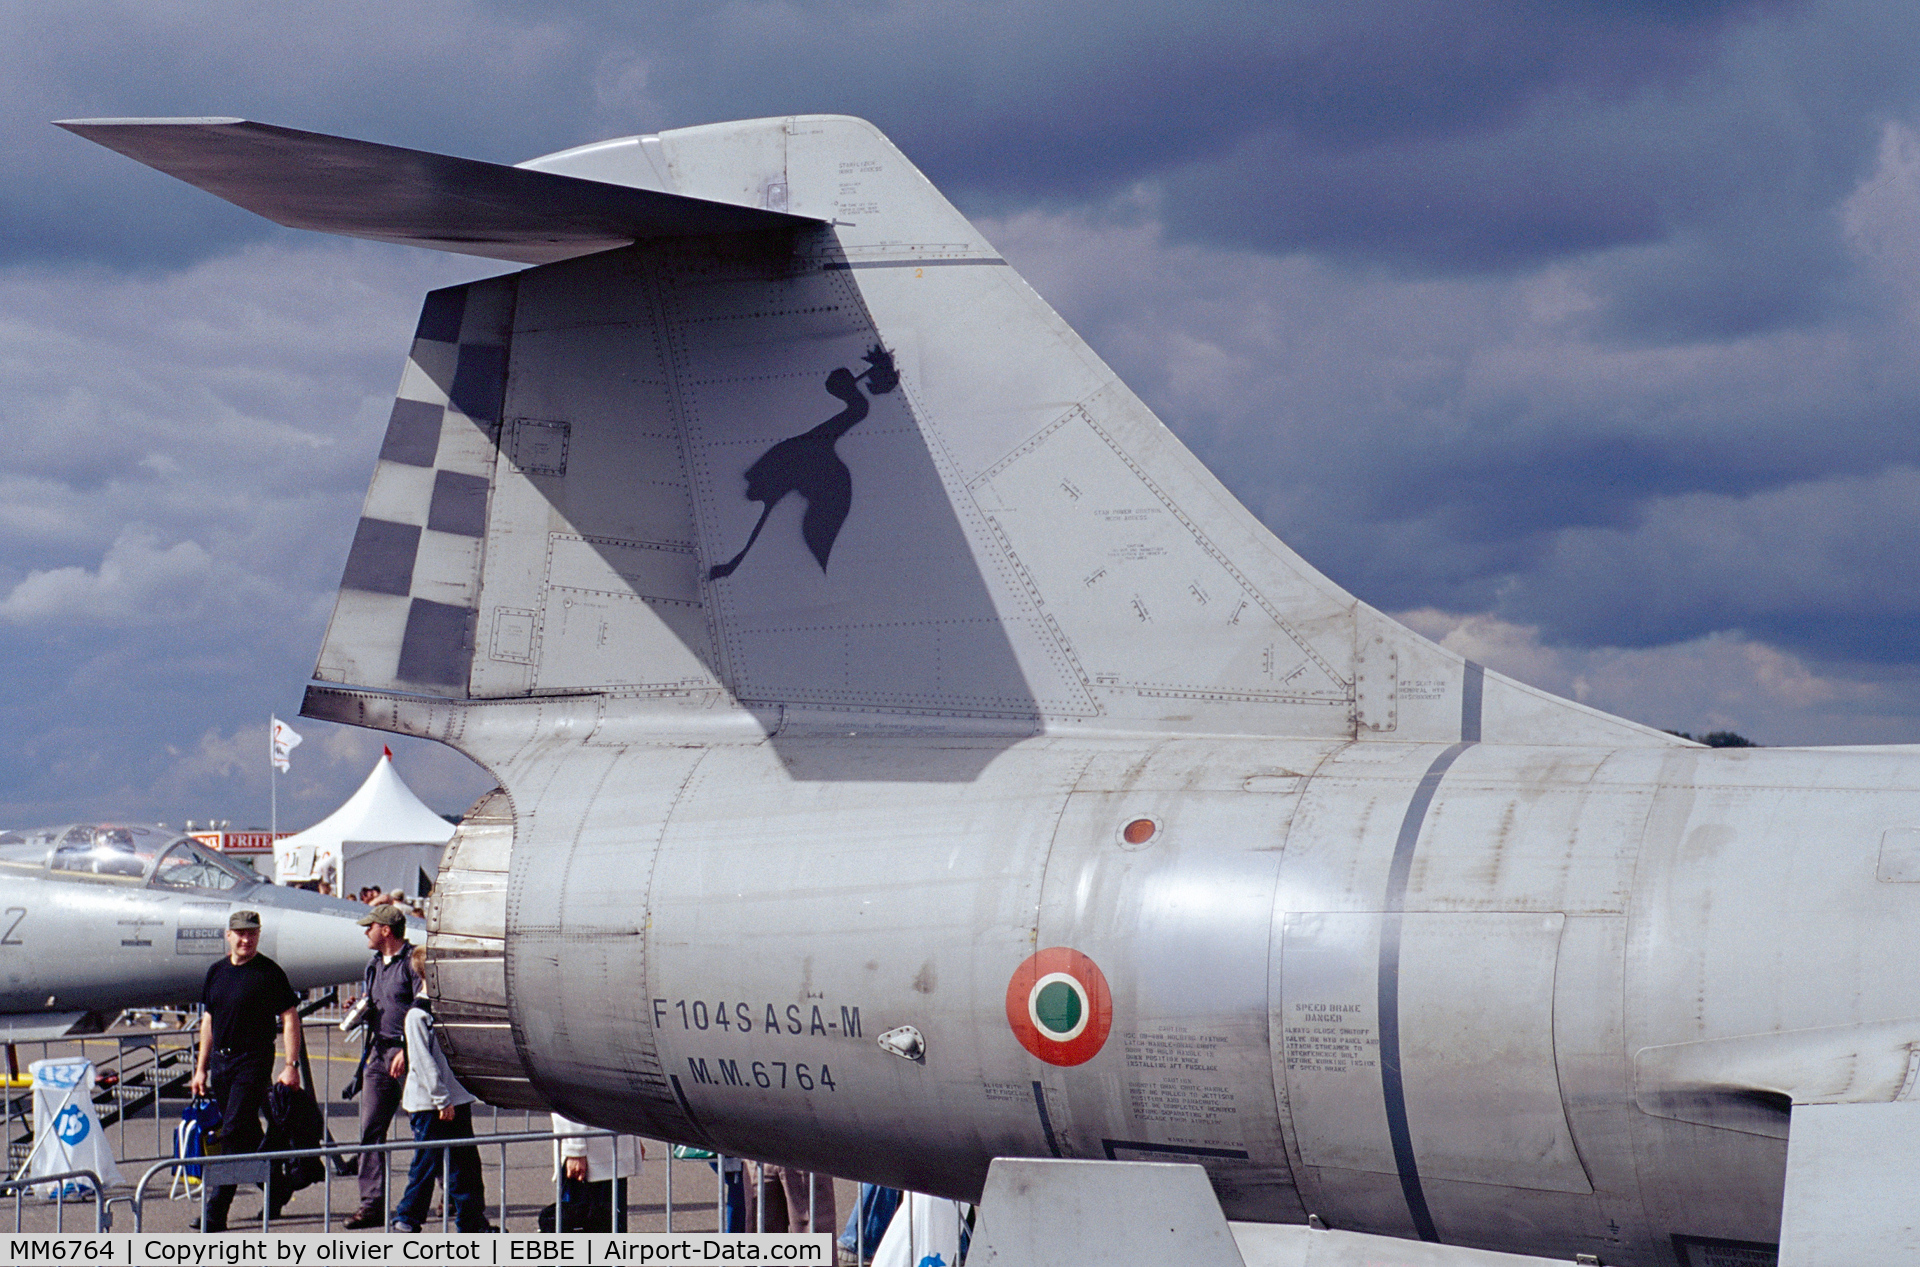 MM6764, Aeritalia F-104S-ASA-M Starfighter C/N 1064, closer view of the tail